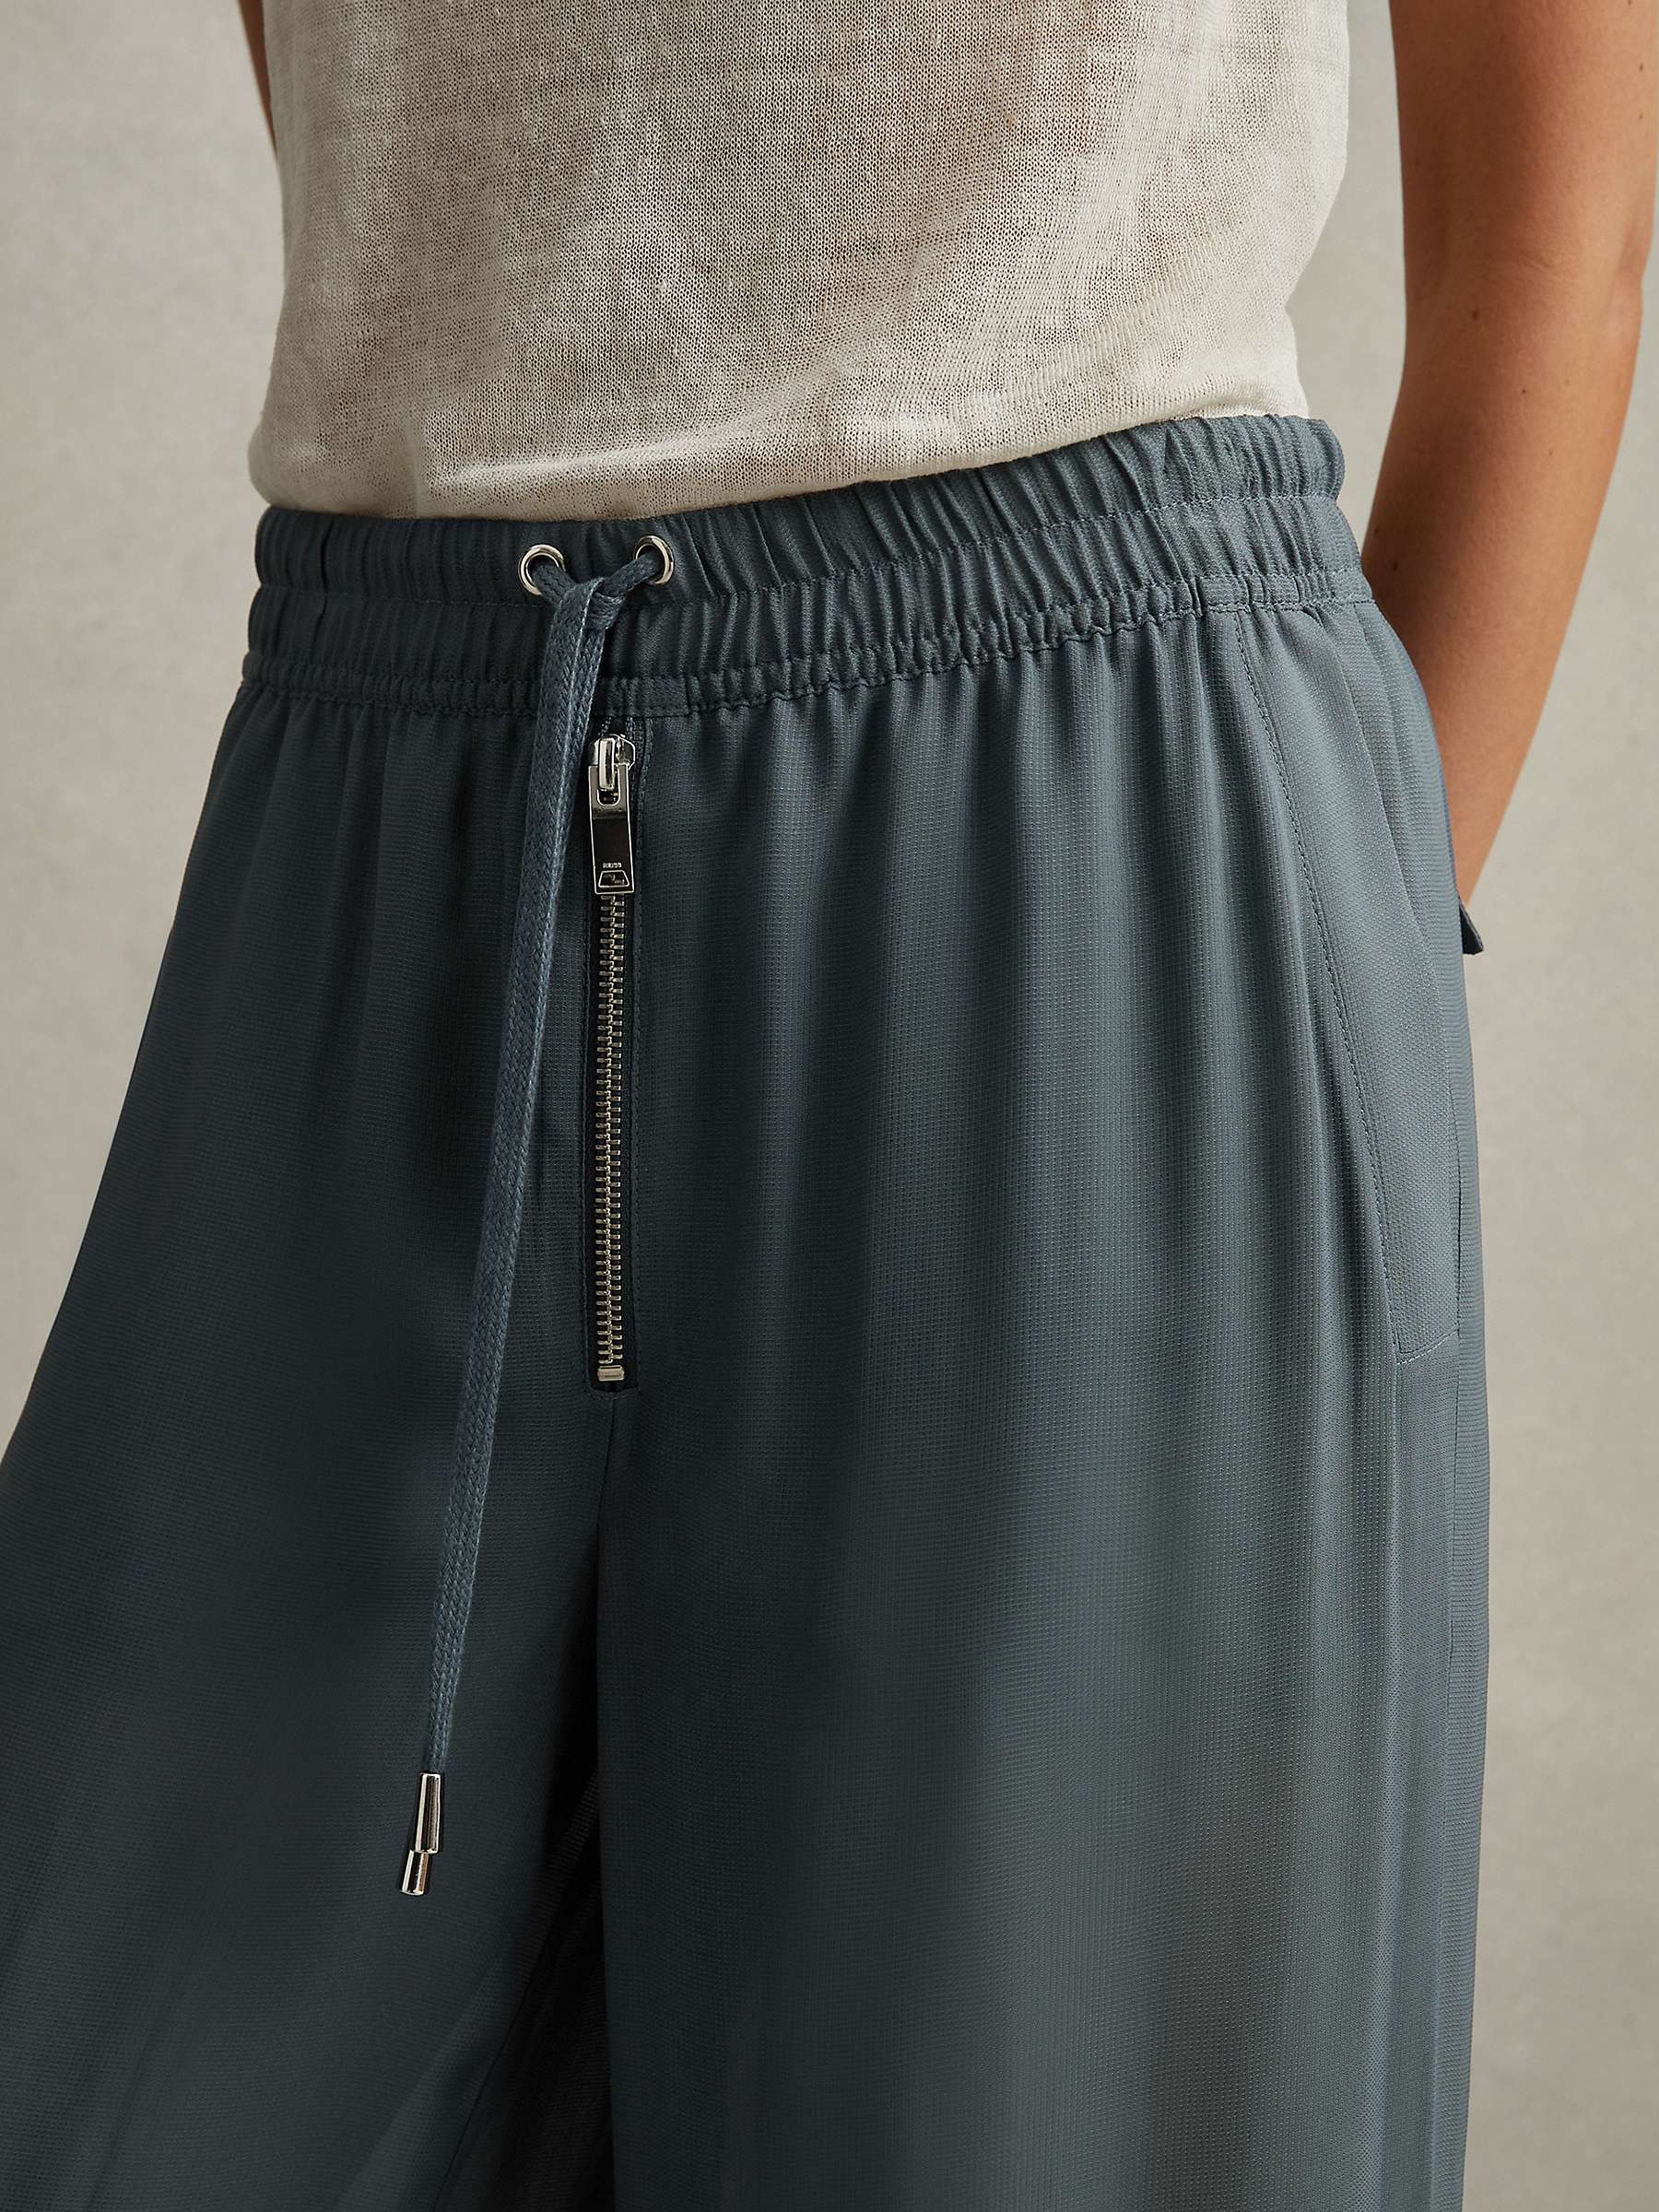 Buy Reiss Cameilla Wide Leg Zip Detail Trousers, Blue Online at johnlewis.com